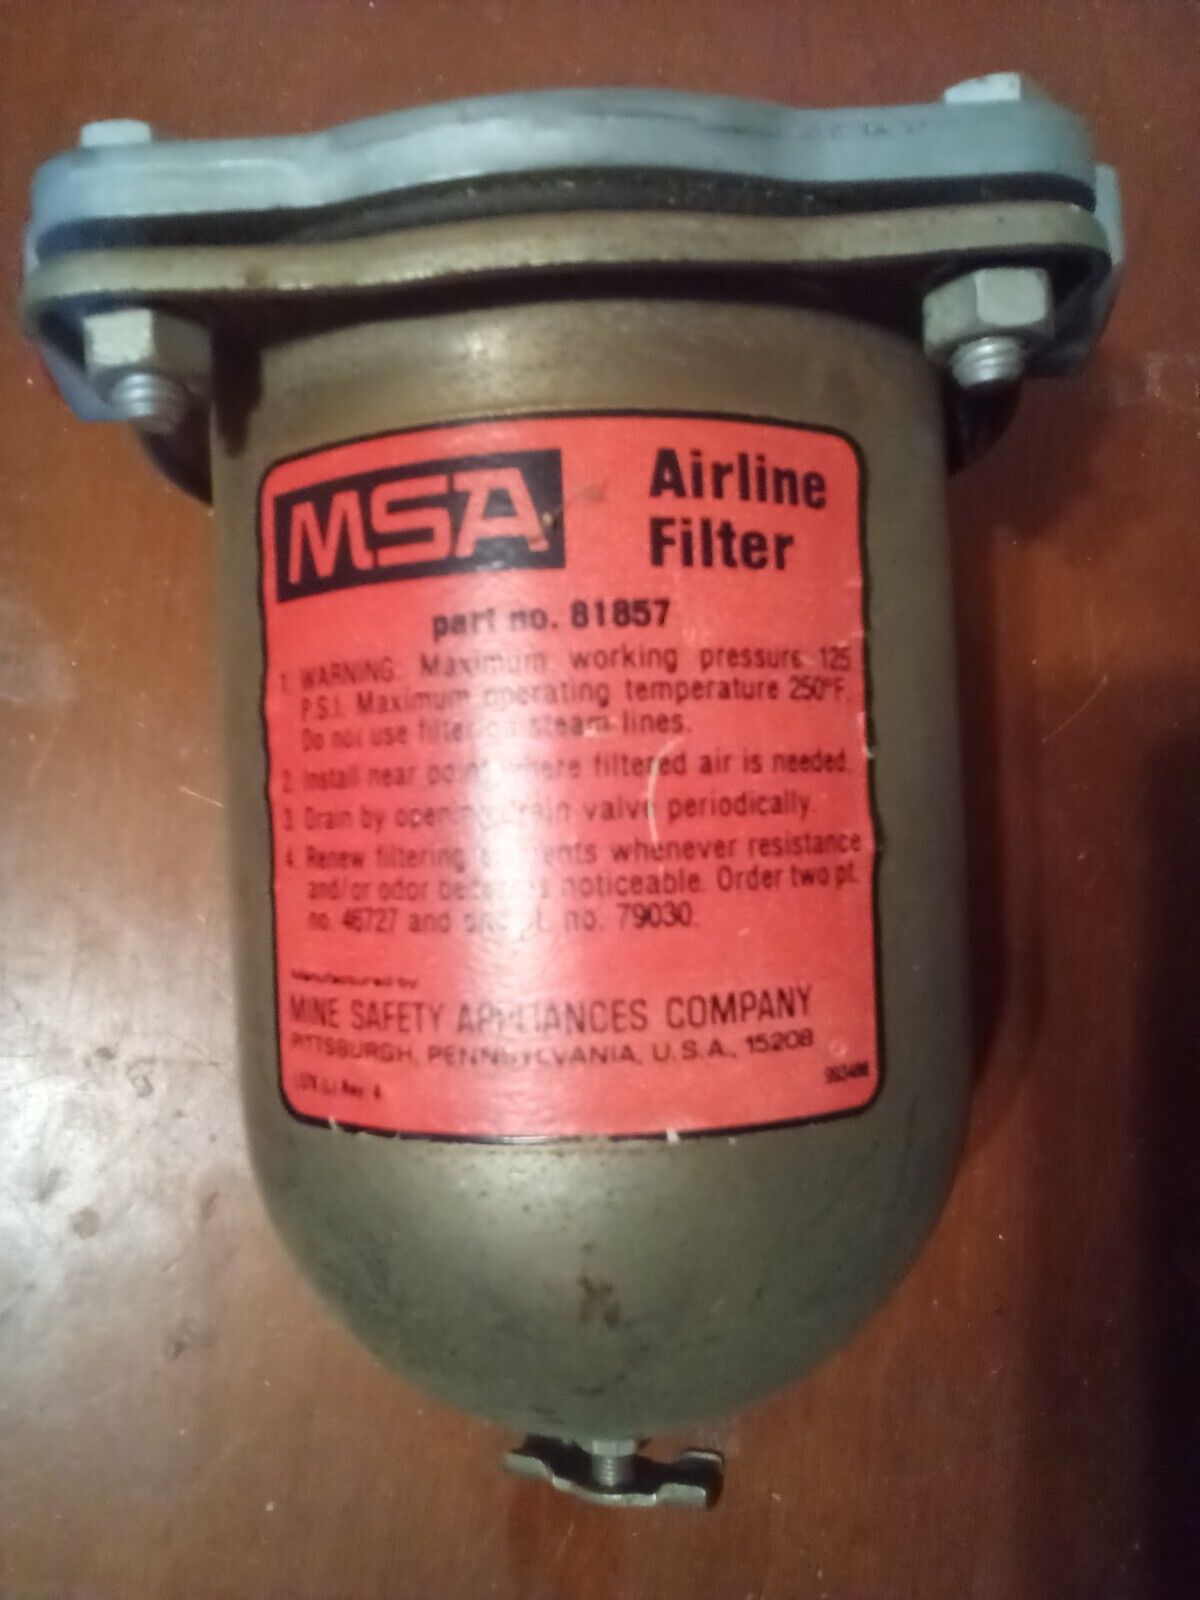 MSA MINE SAFETY APPLIANCES CO. AIRLINE FILTER 81857